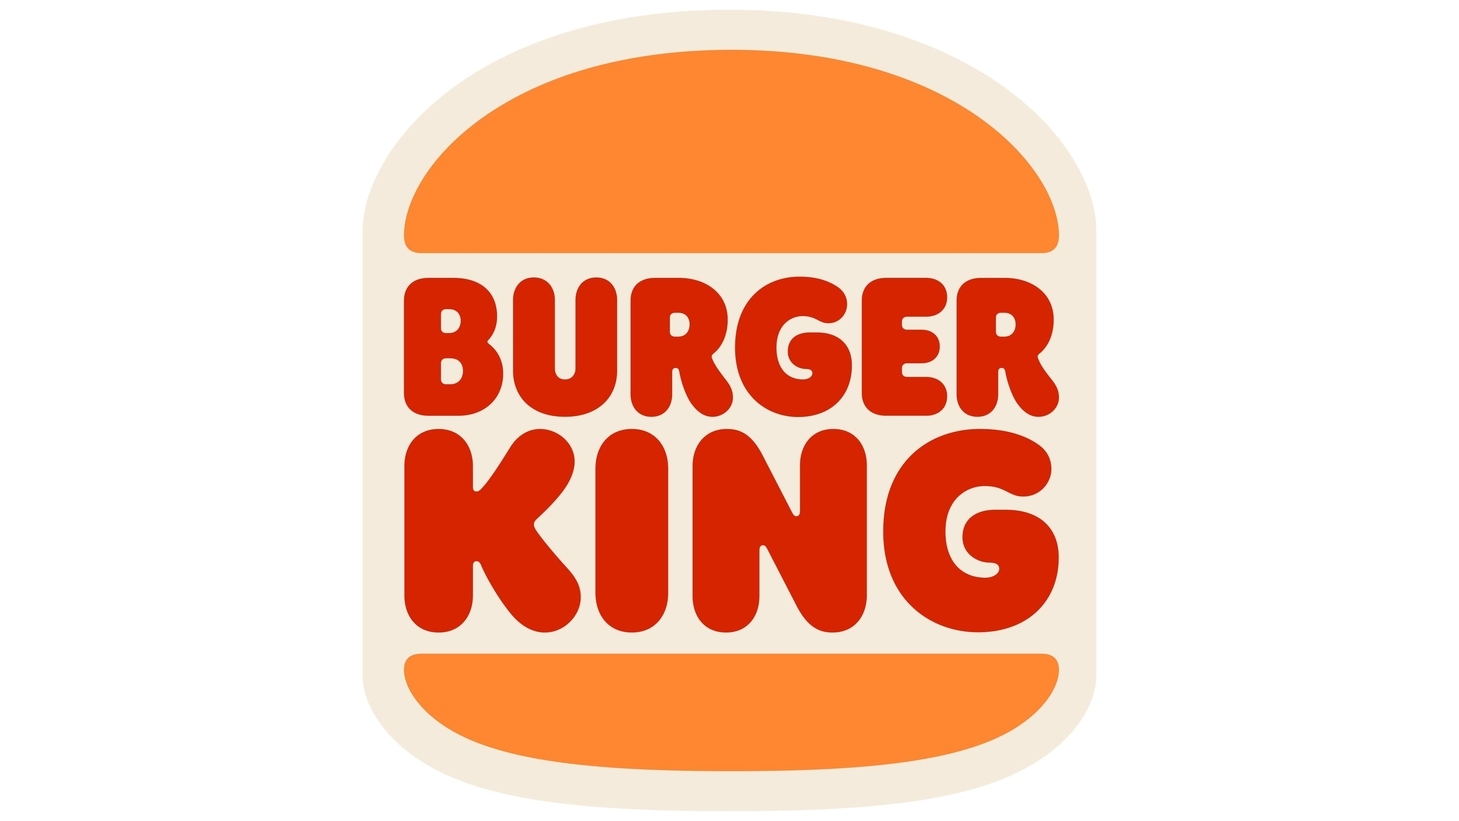 Burger king sign 2021 present